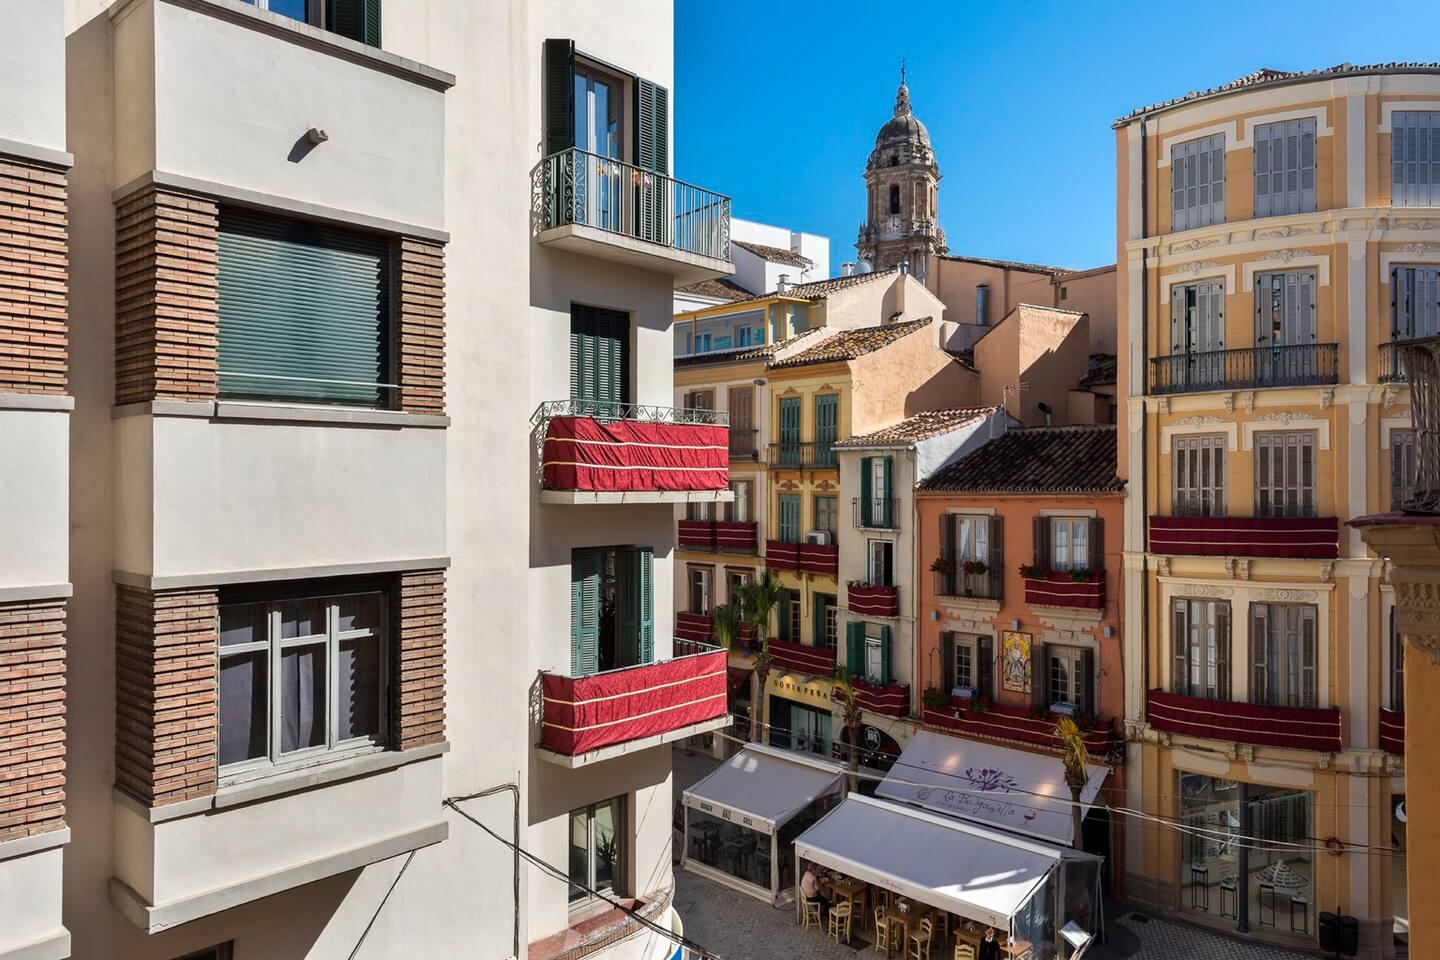 Caldereria - 3 bedroom flat in Malaga